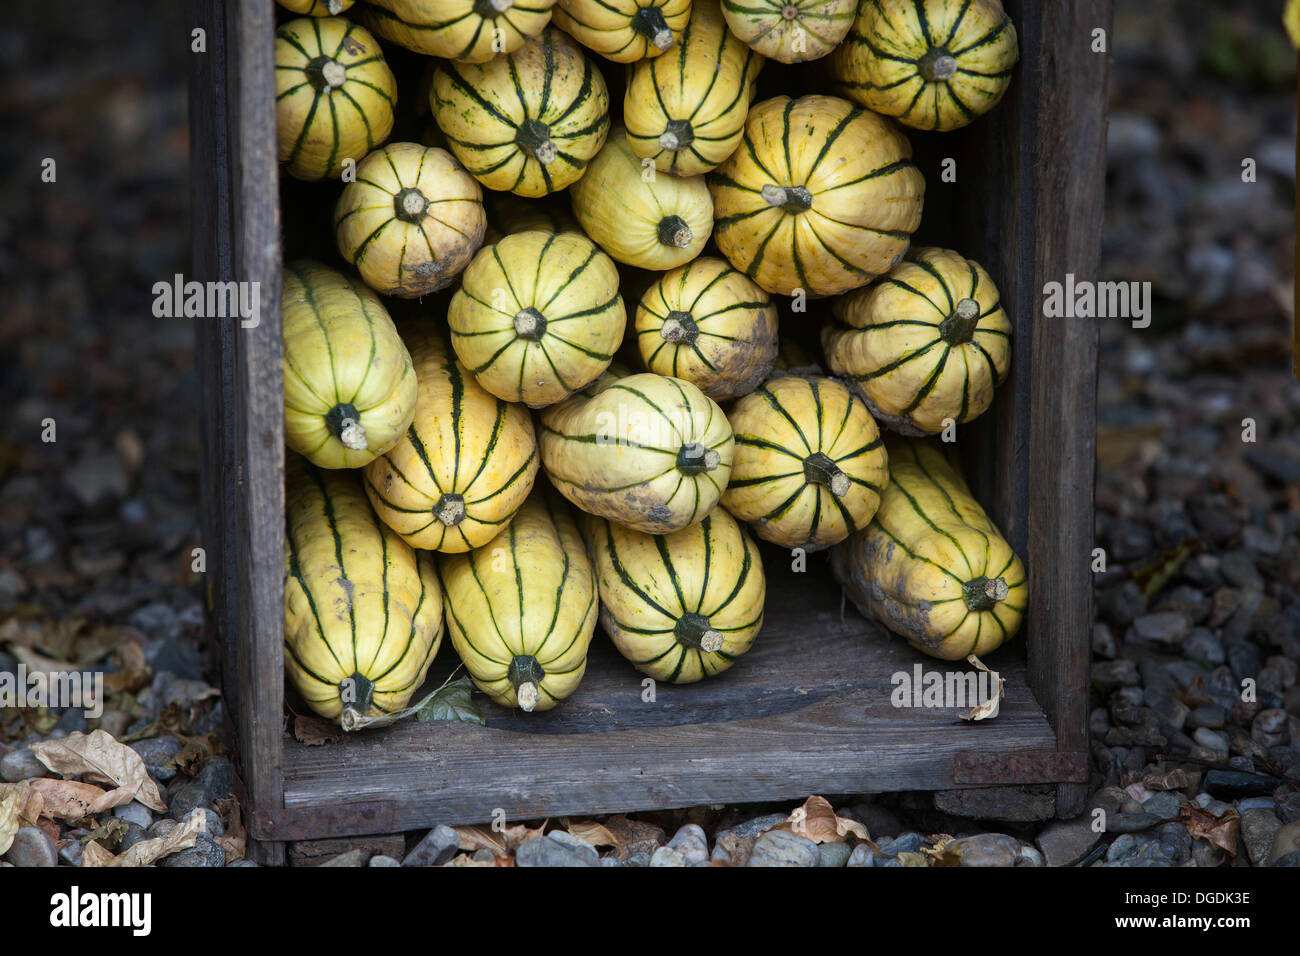 Autumn guards in vegetable garden pumpkins crate, Squash Cucurbita pepo, wooden crate Display Stock Photo